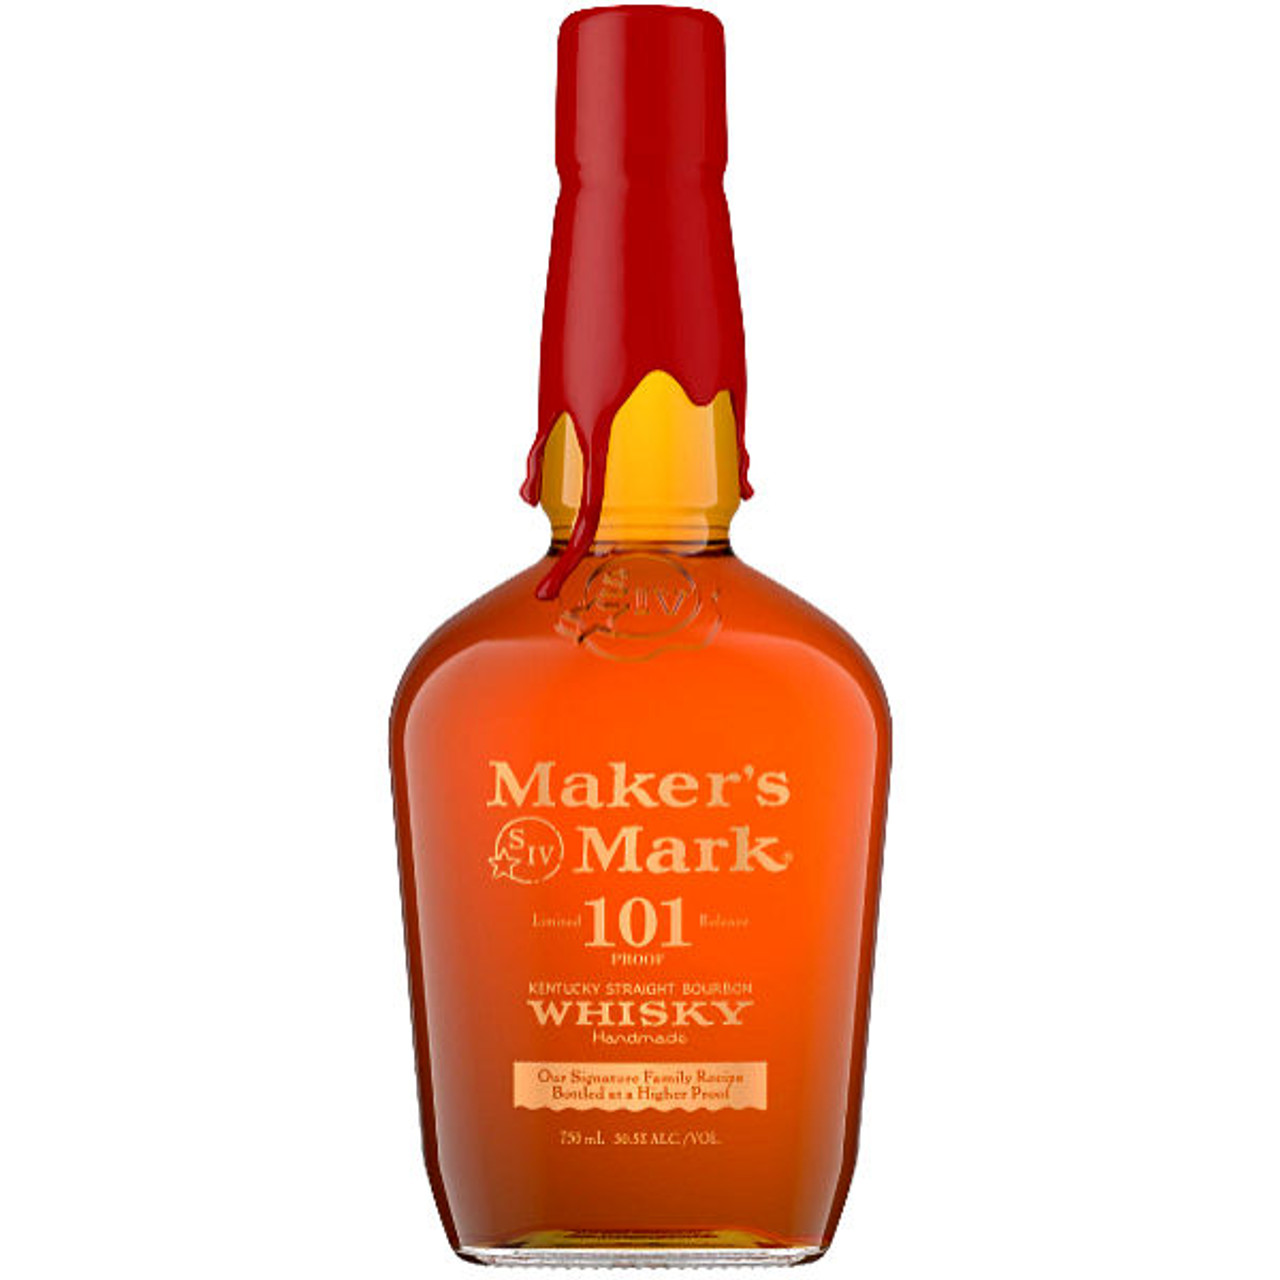 Maker's Mark 101 Proof Limited Release Bourbon Whisky 750ml